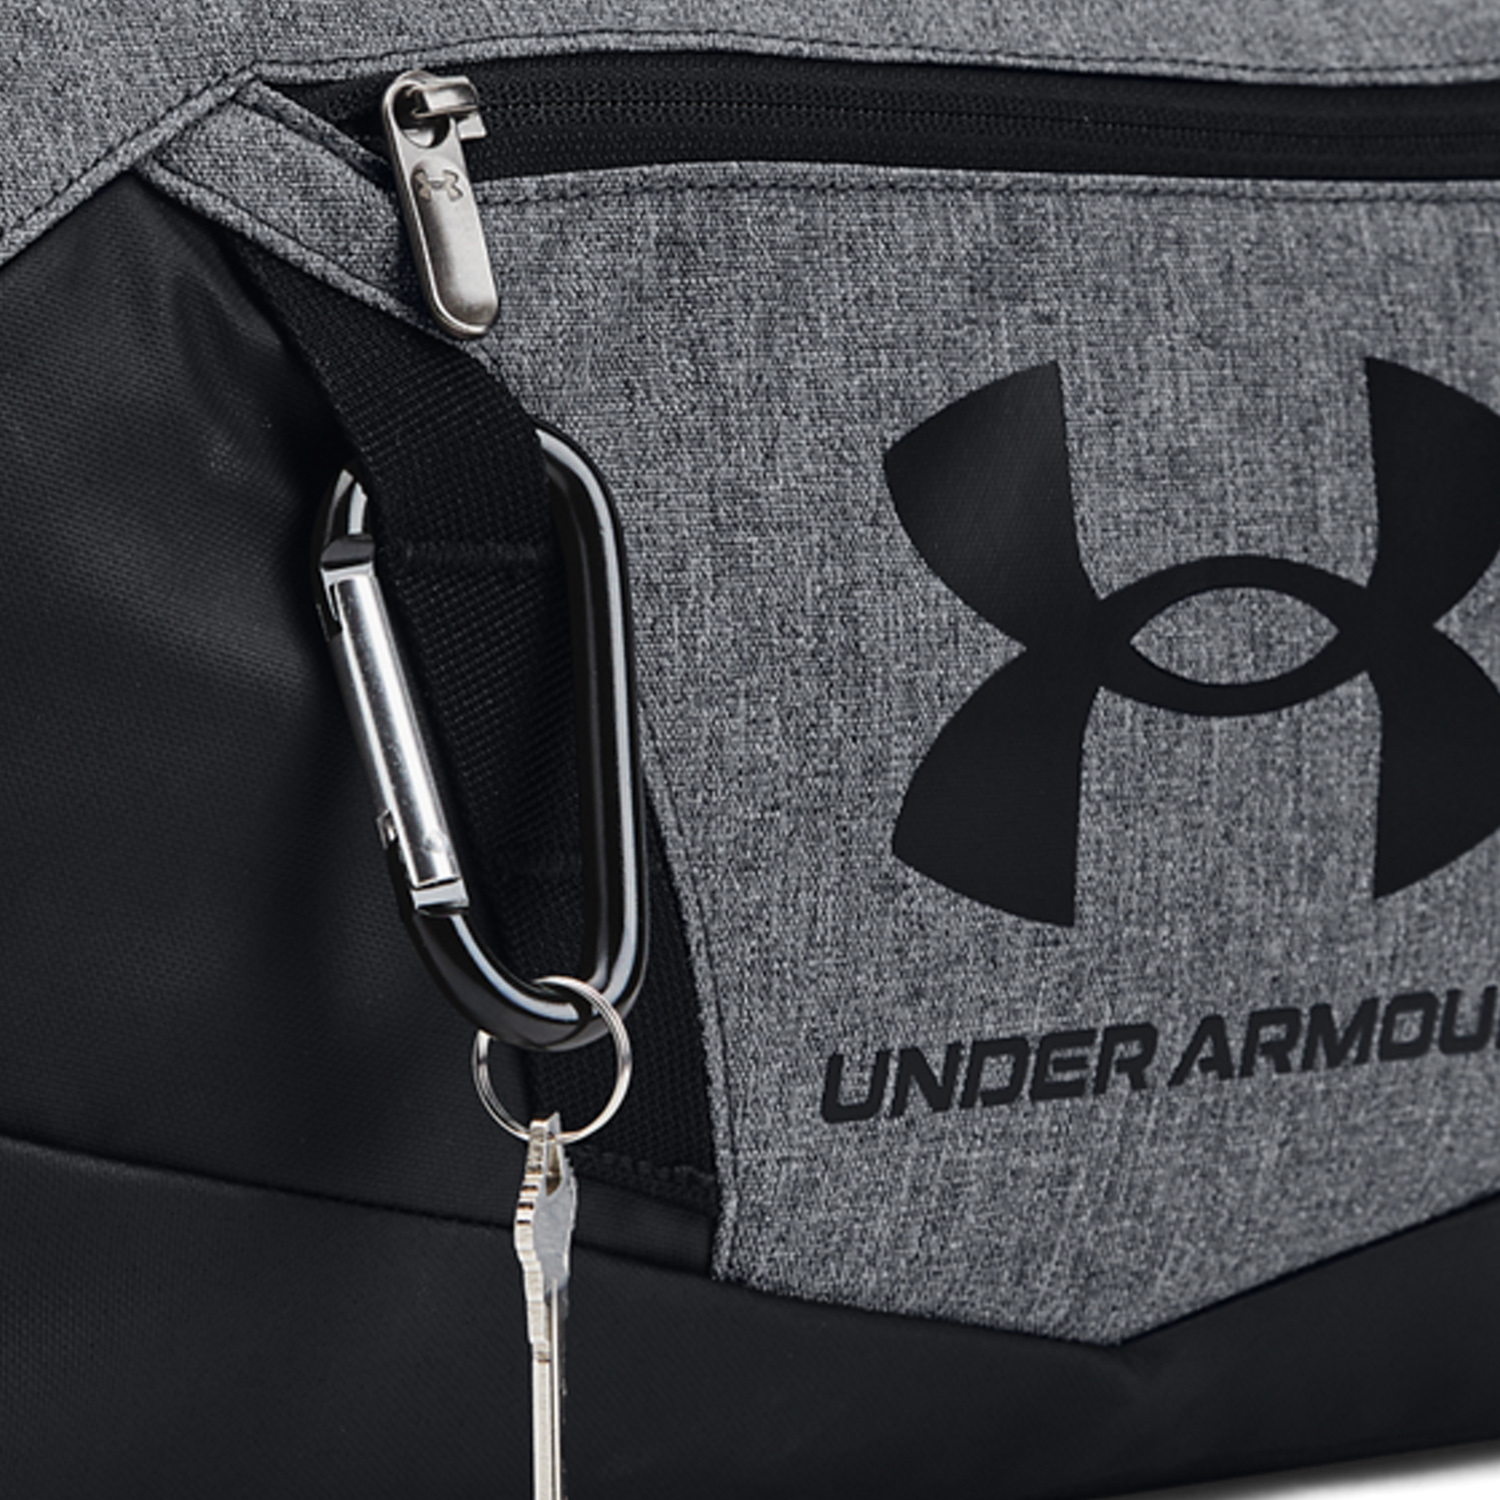 Under Armour Undeniable 5.0 Mini Duffle Bag - Pitch Gray/Medium Heather/Black